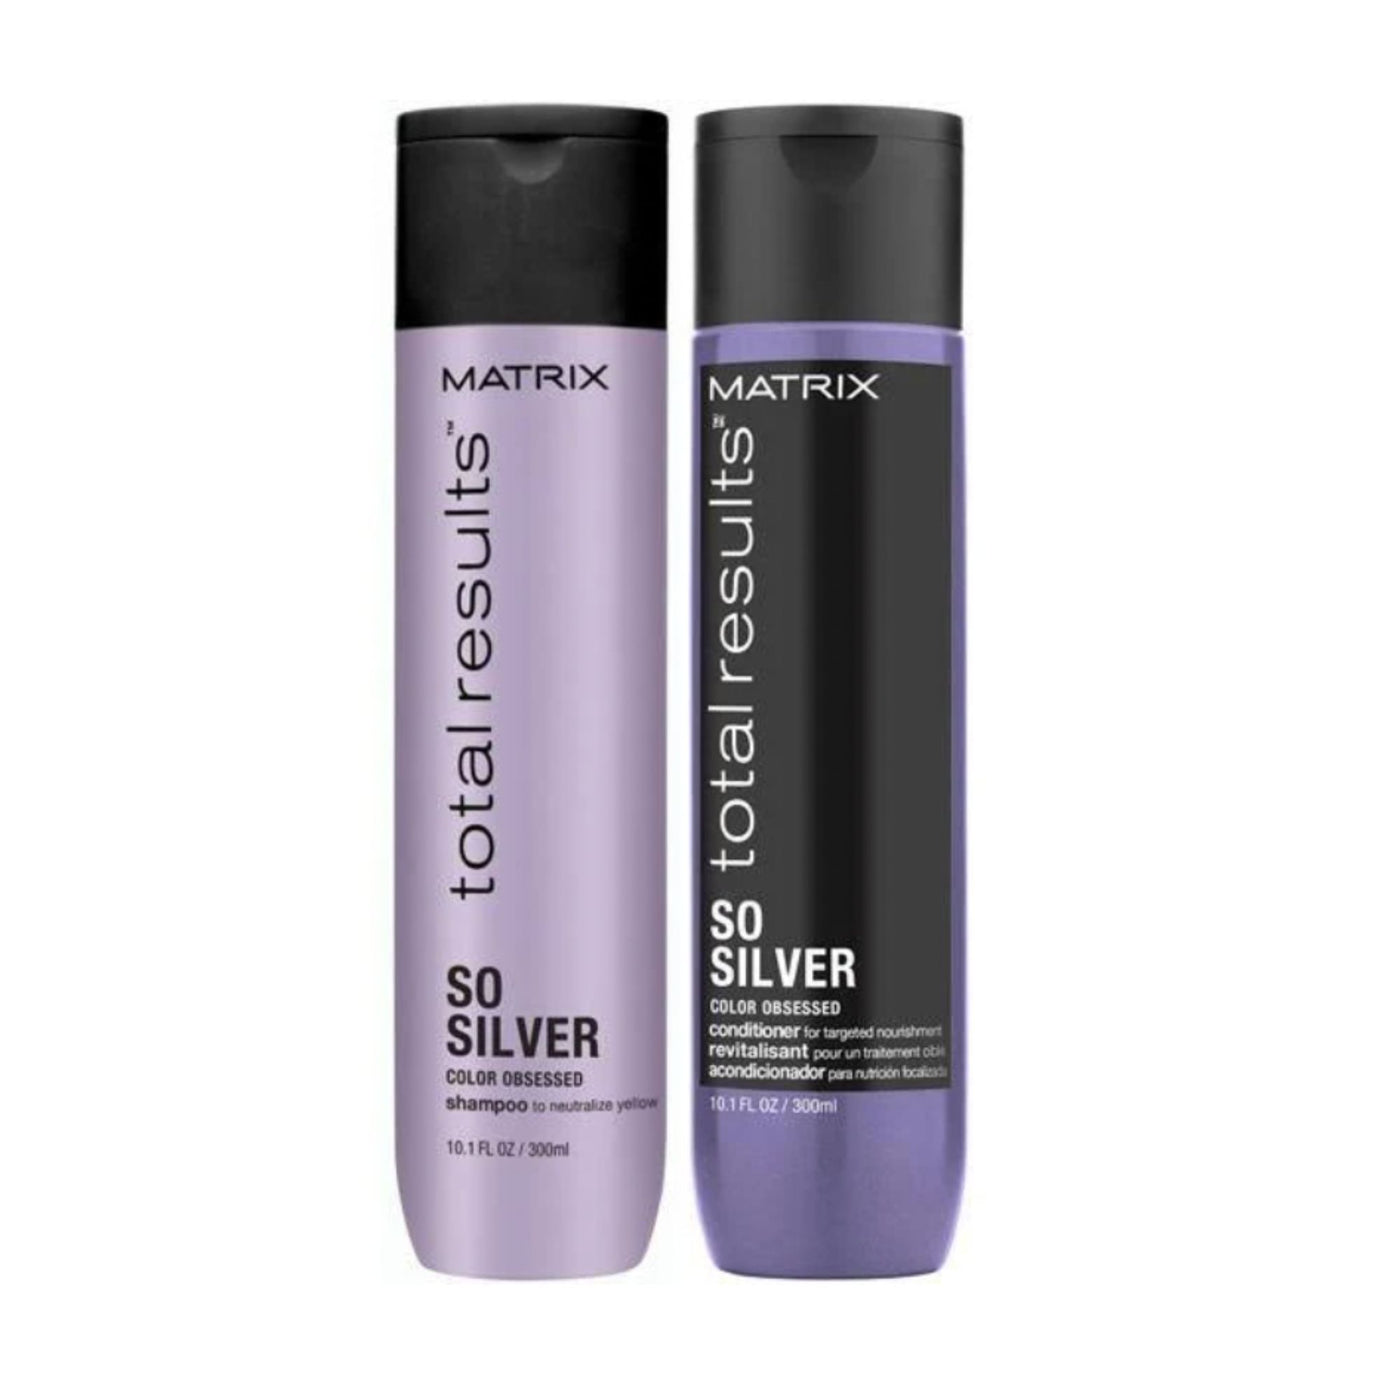 Matrix So Silver Duo Set Shampoo & Conditoner For Blonde & Grey Hair